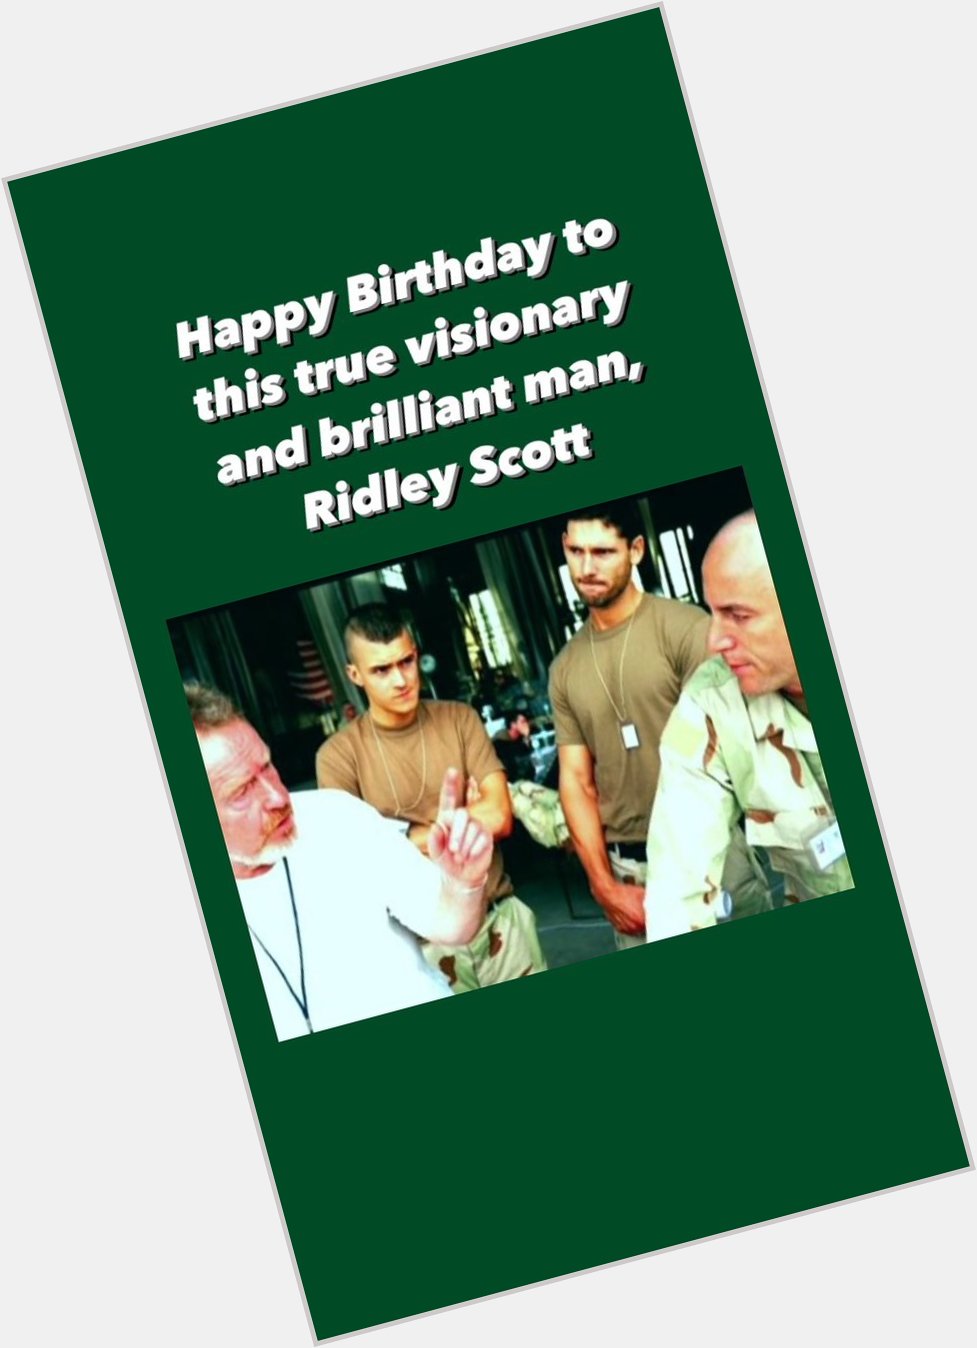 Orlando via his IG stories wishing Ridley Scott a happy birthday 